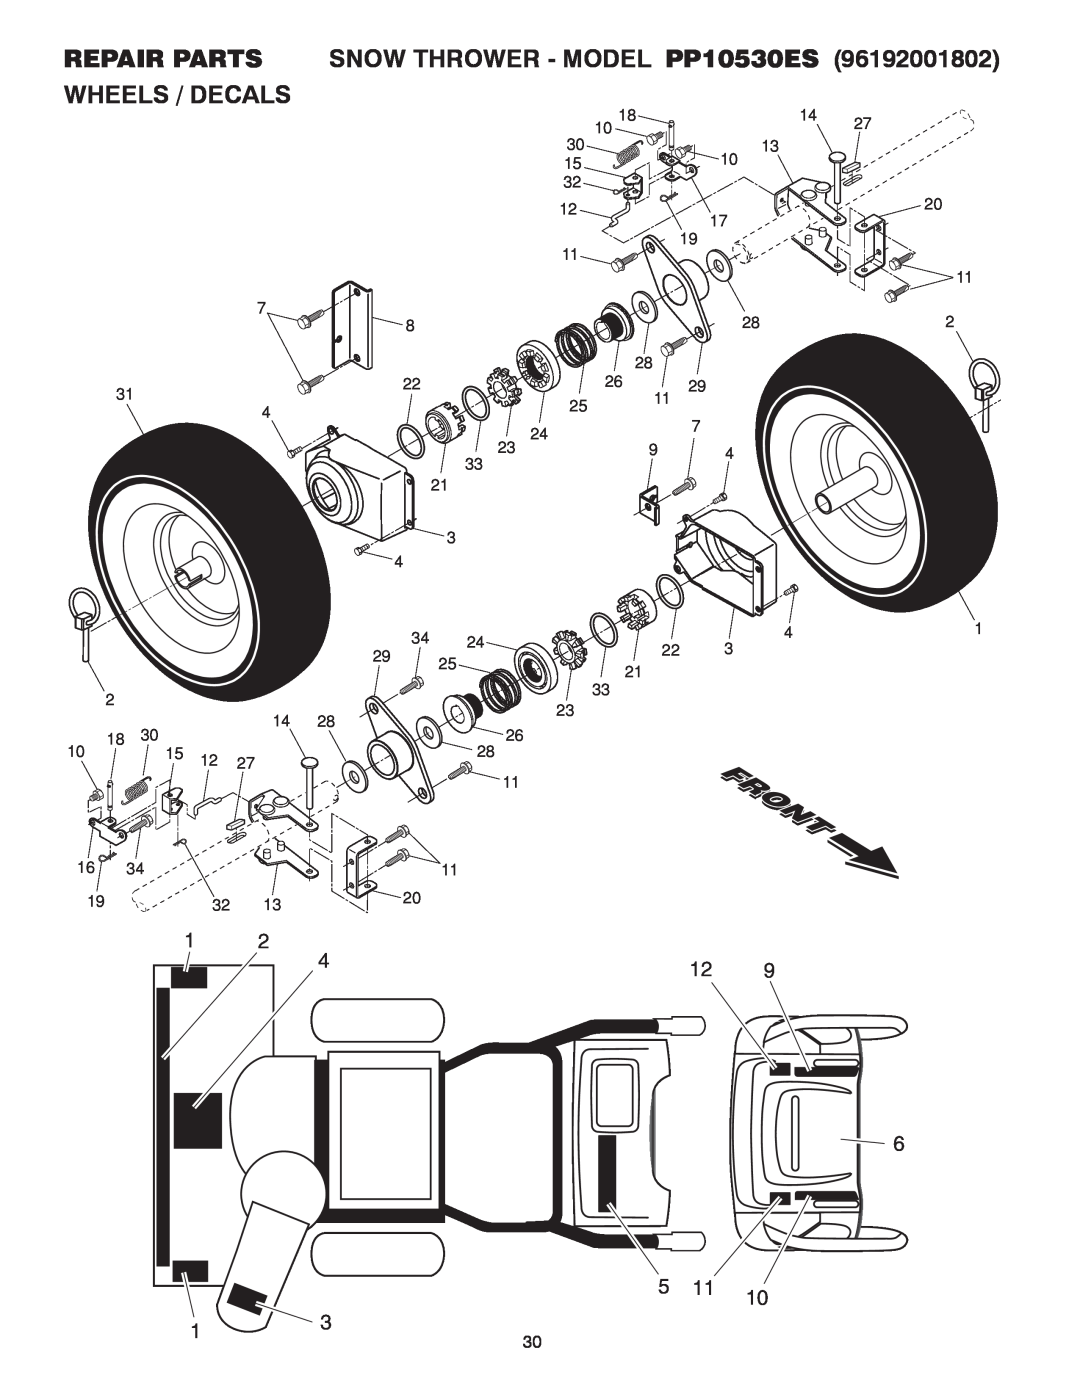 Poulan 96192001802, 416833 owner manual SNOW THROWER - MODEL PP10530ES, Repair Parts Wheels / Decals, 5 11 